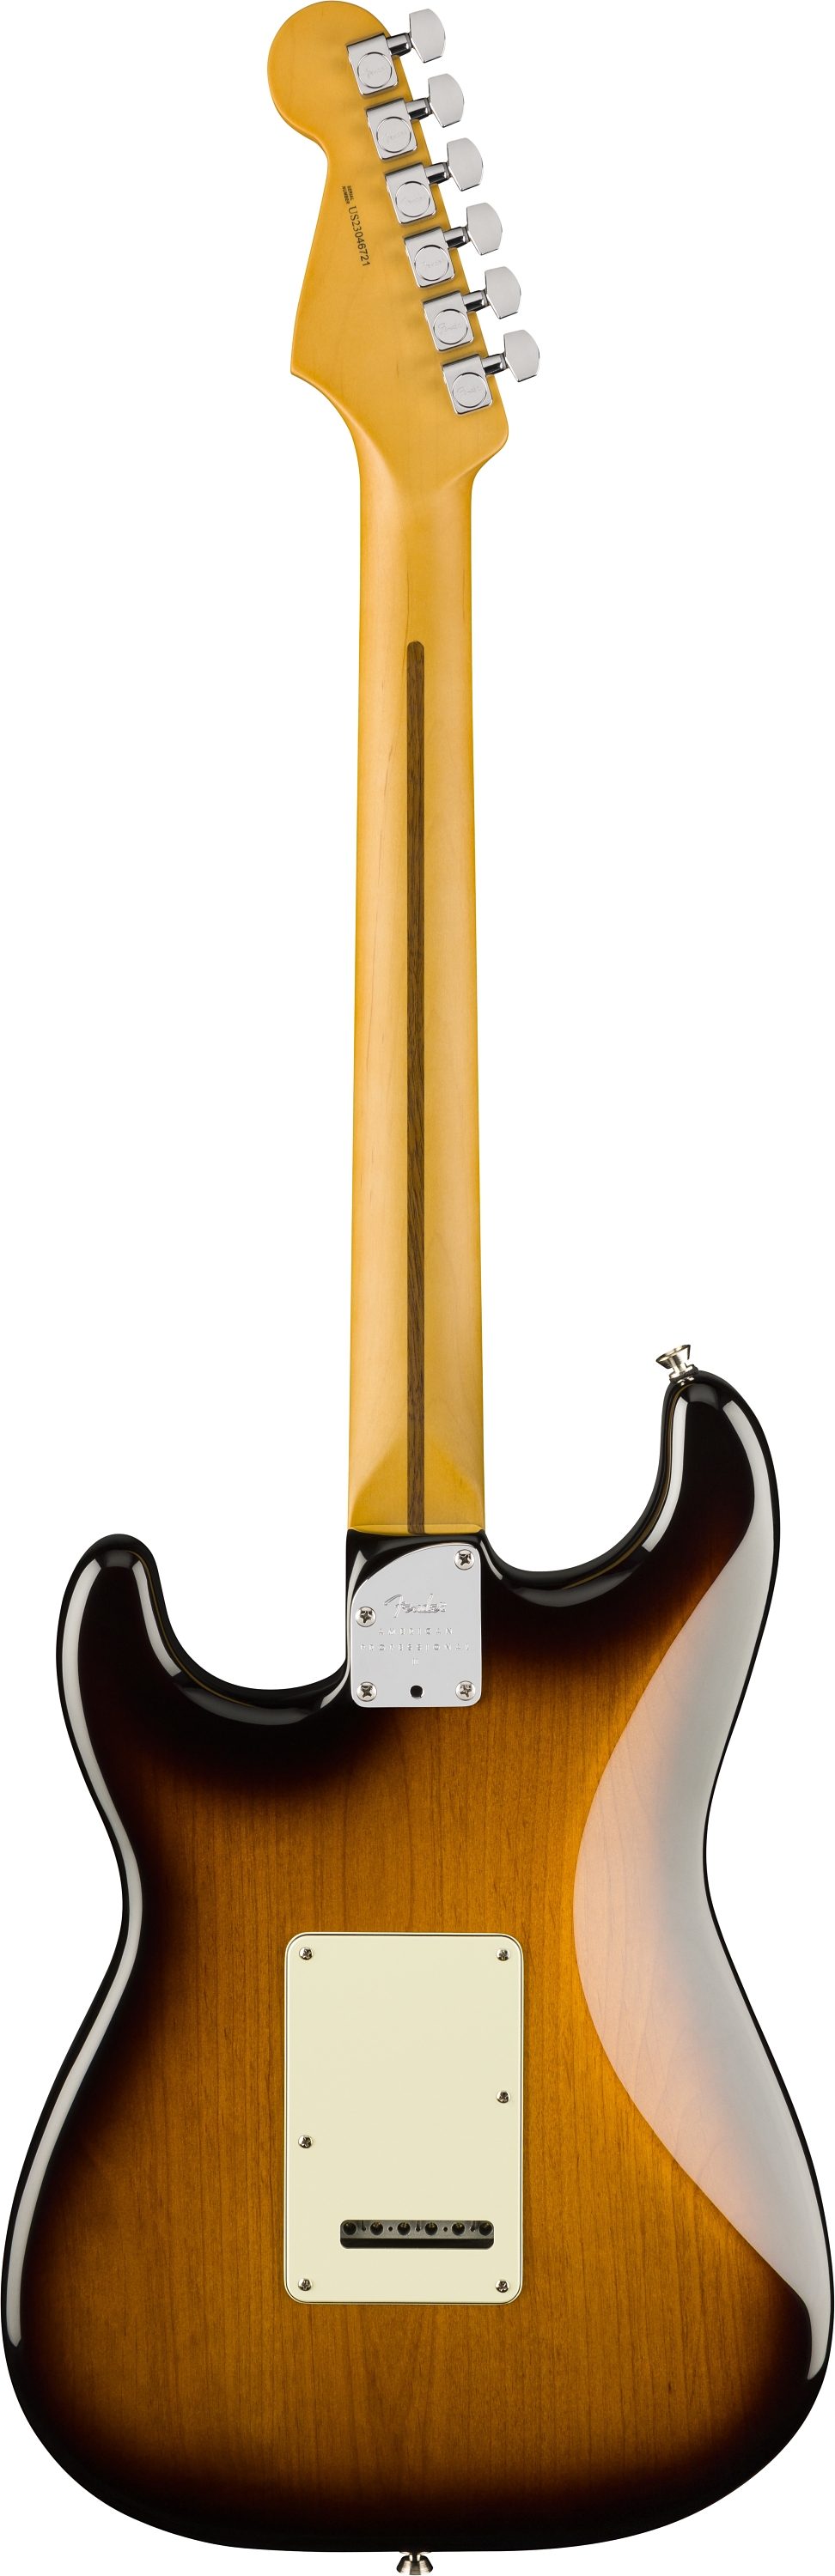 Fender Strat American Professional Ii 70th Anniversary Usa 3s Trem Rw - 2-color Sunburst - Guitare Électrique Forme Str - Variation 2